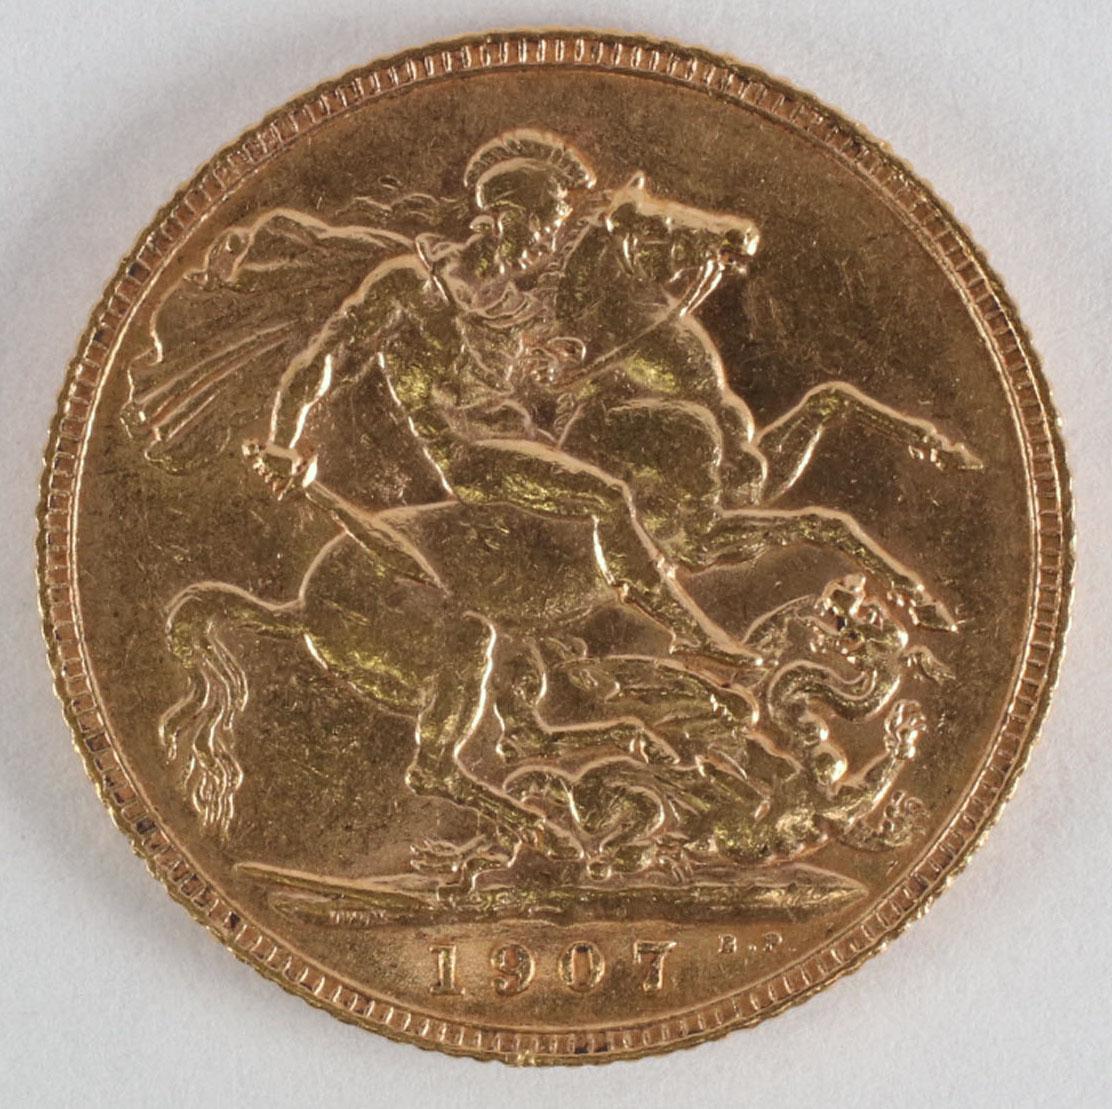 1907 Gold Great Britain Half Sovereign, King Edward VII Coin